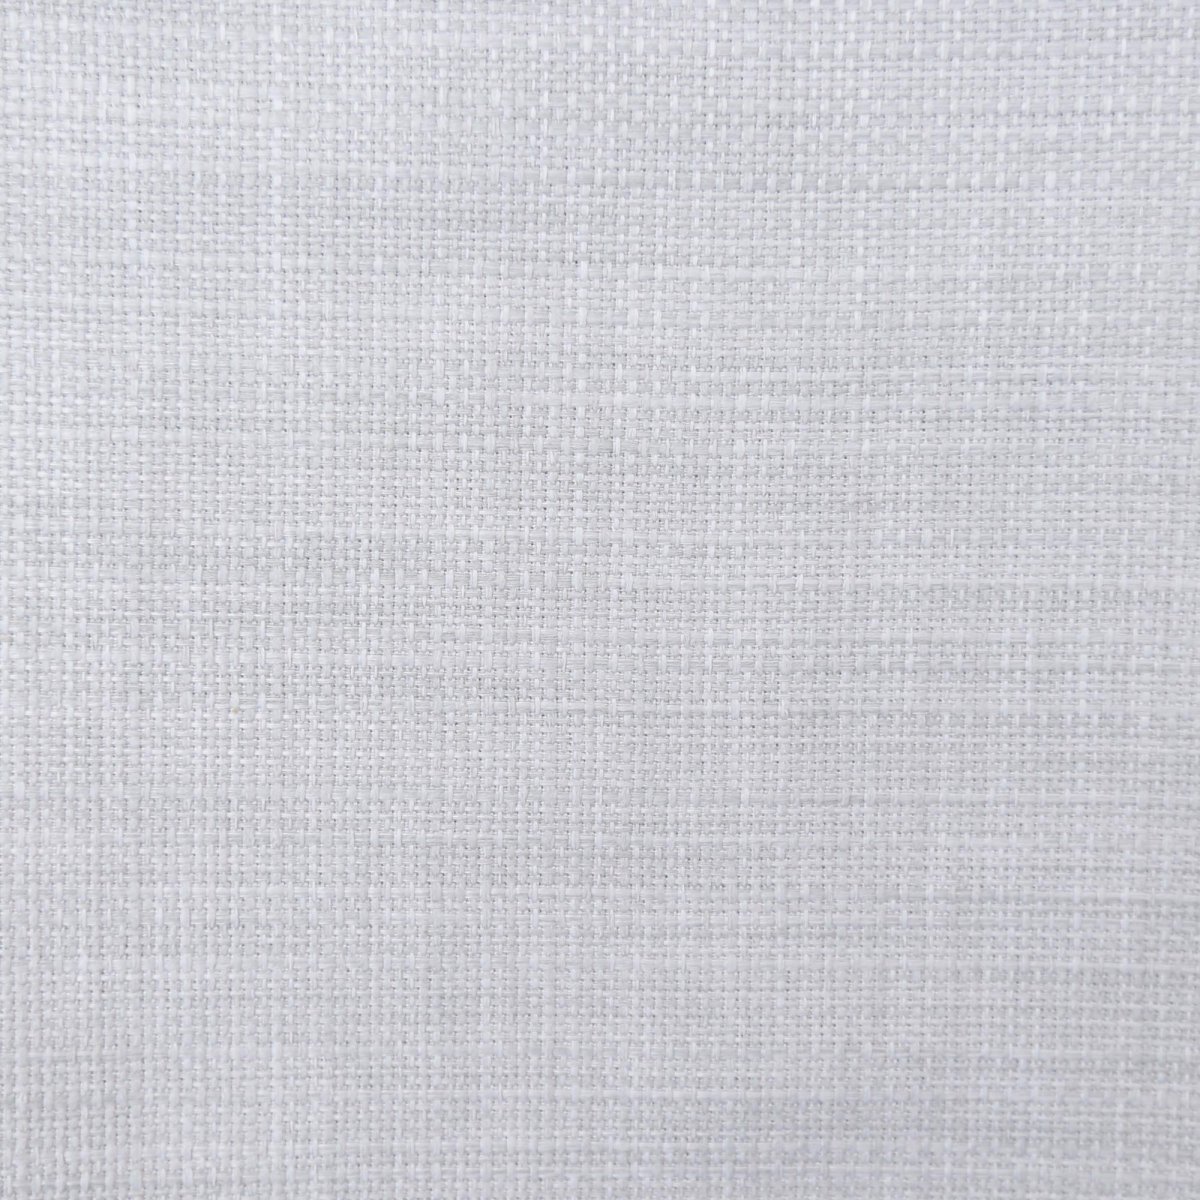 Белый лен текстура